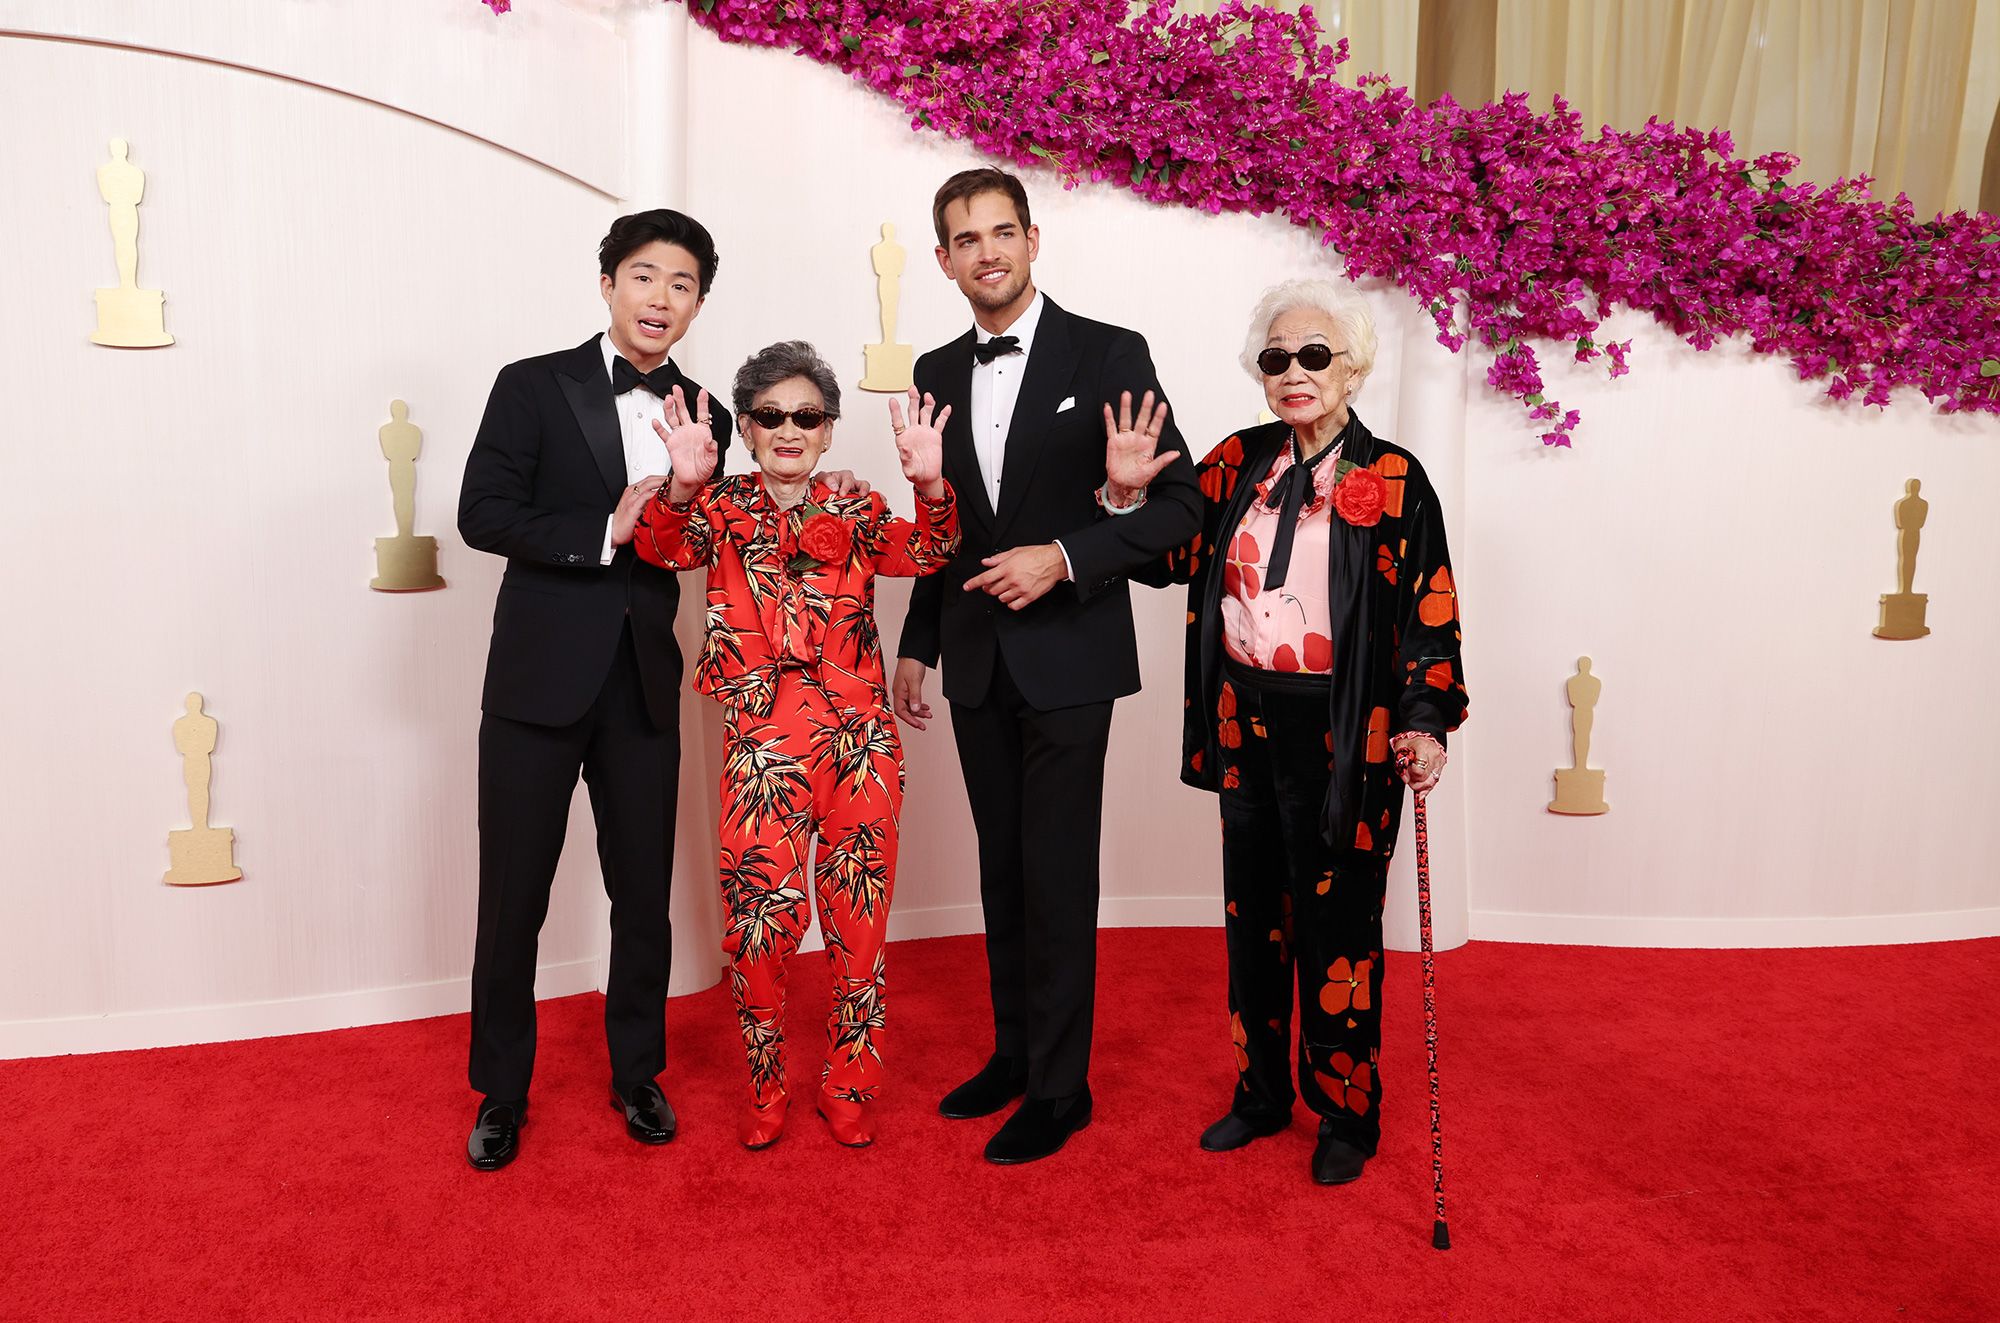 Sean Wang and Sam Davis, nominated for their short documentary “Nai Nai & Wai Po” (or “Grandma & Grandma”), pose alongside the film's subjects, Chang Li Hua and Yi Yan Fuei, who were wearing a custom Rodarte.